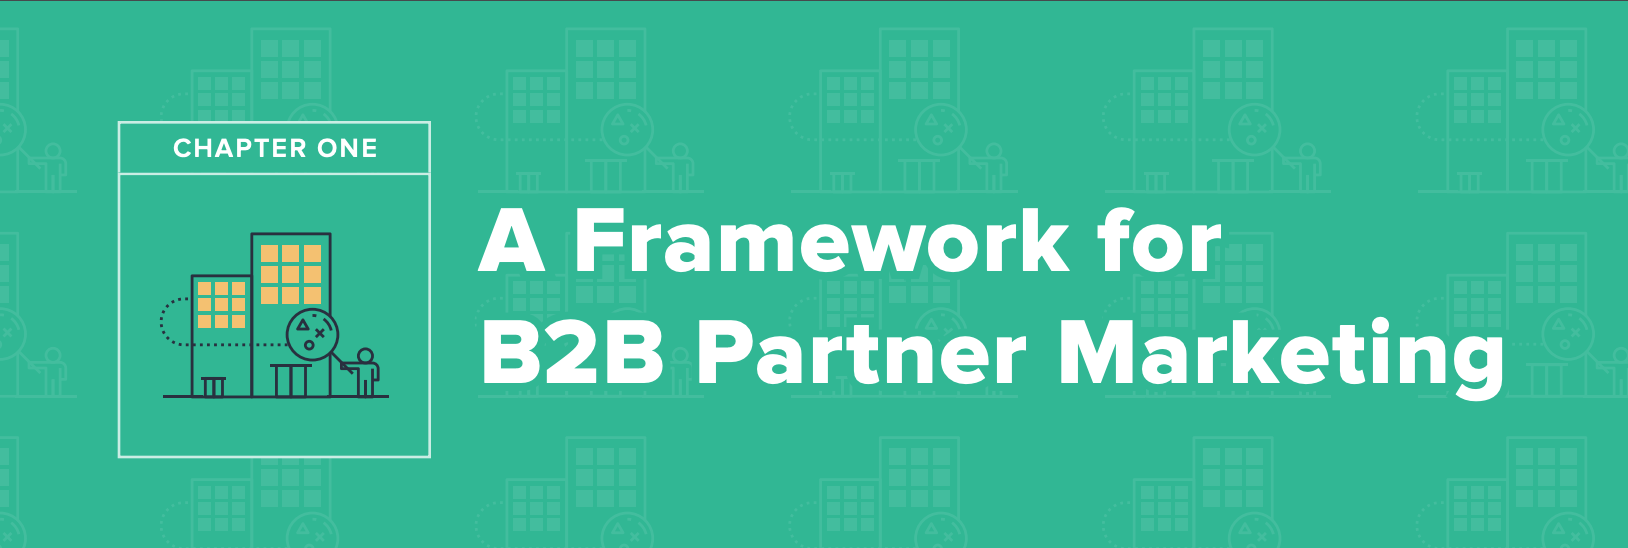 A framework for B2B Partner Marketing